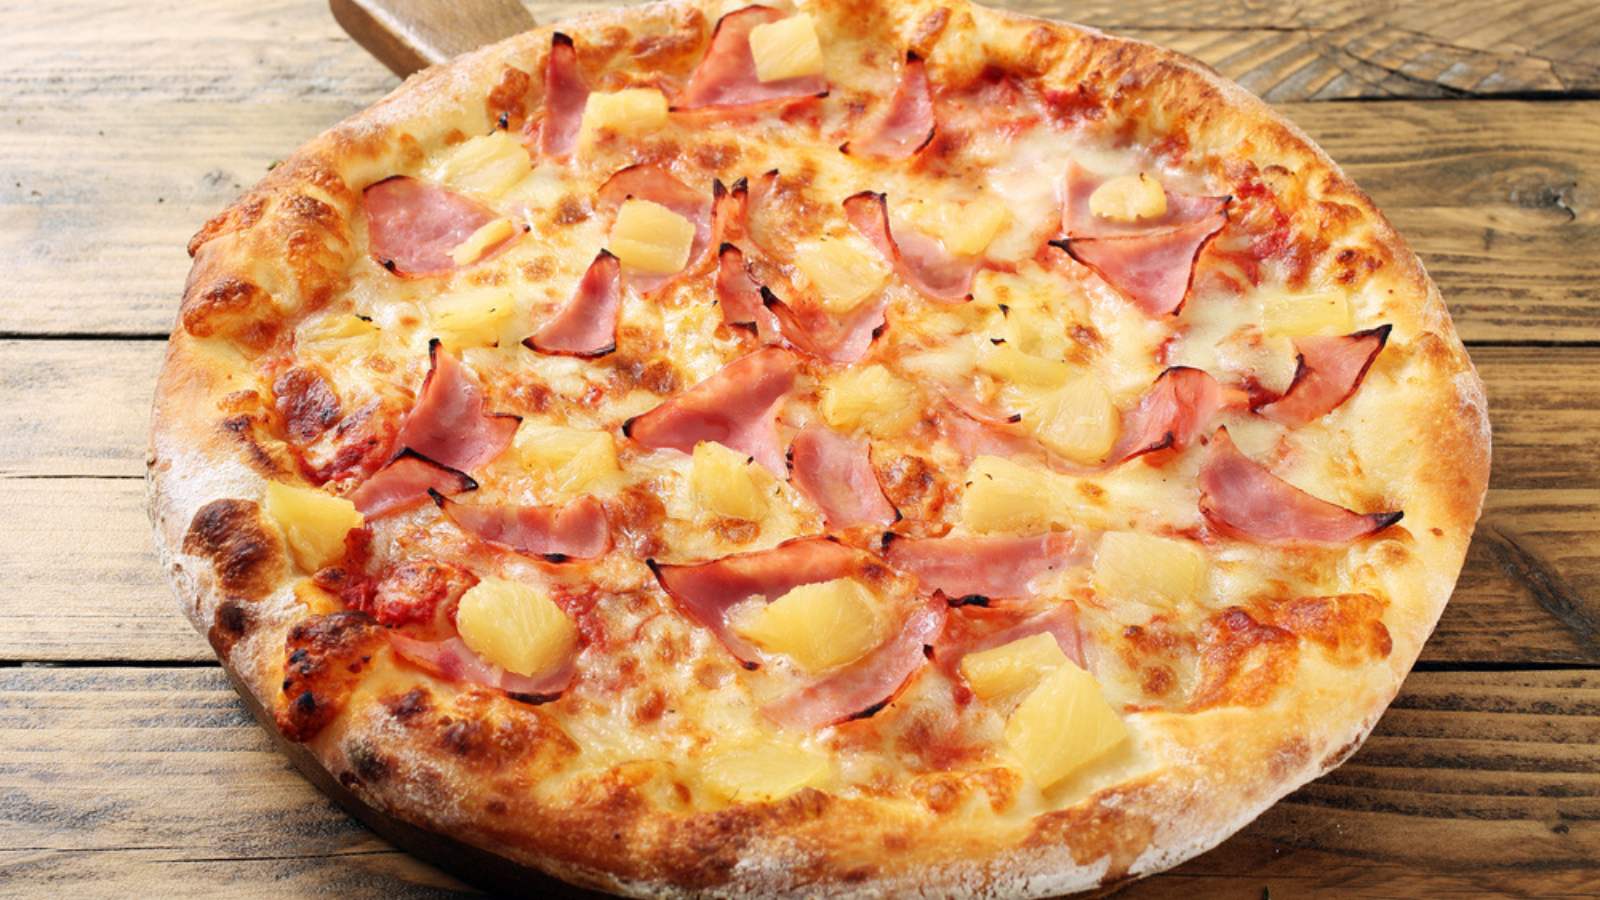 Pineapple pizza.
